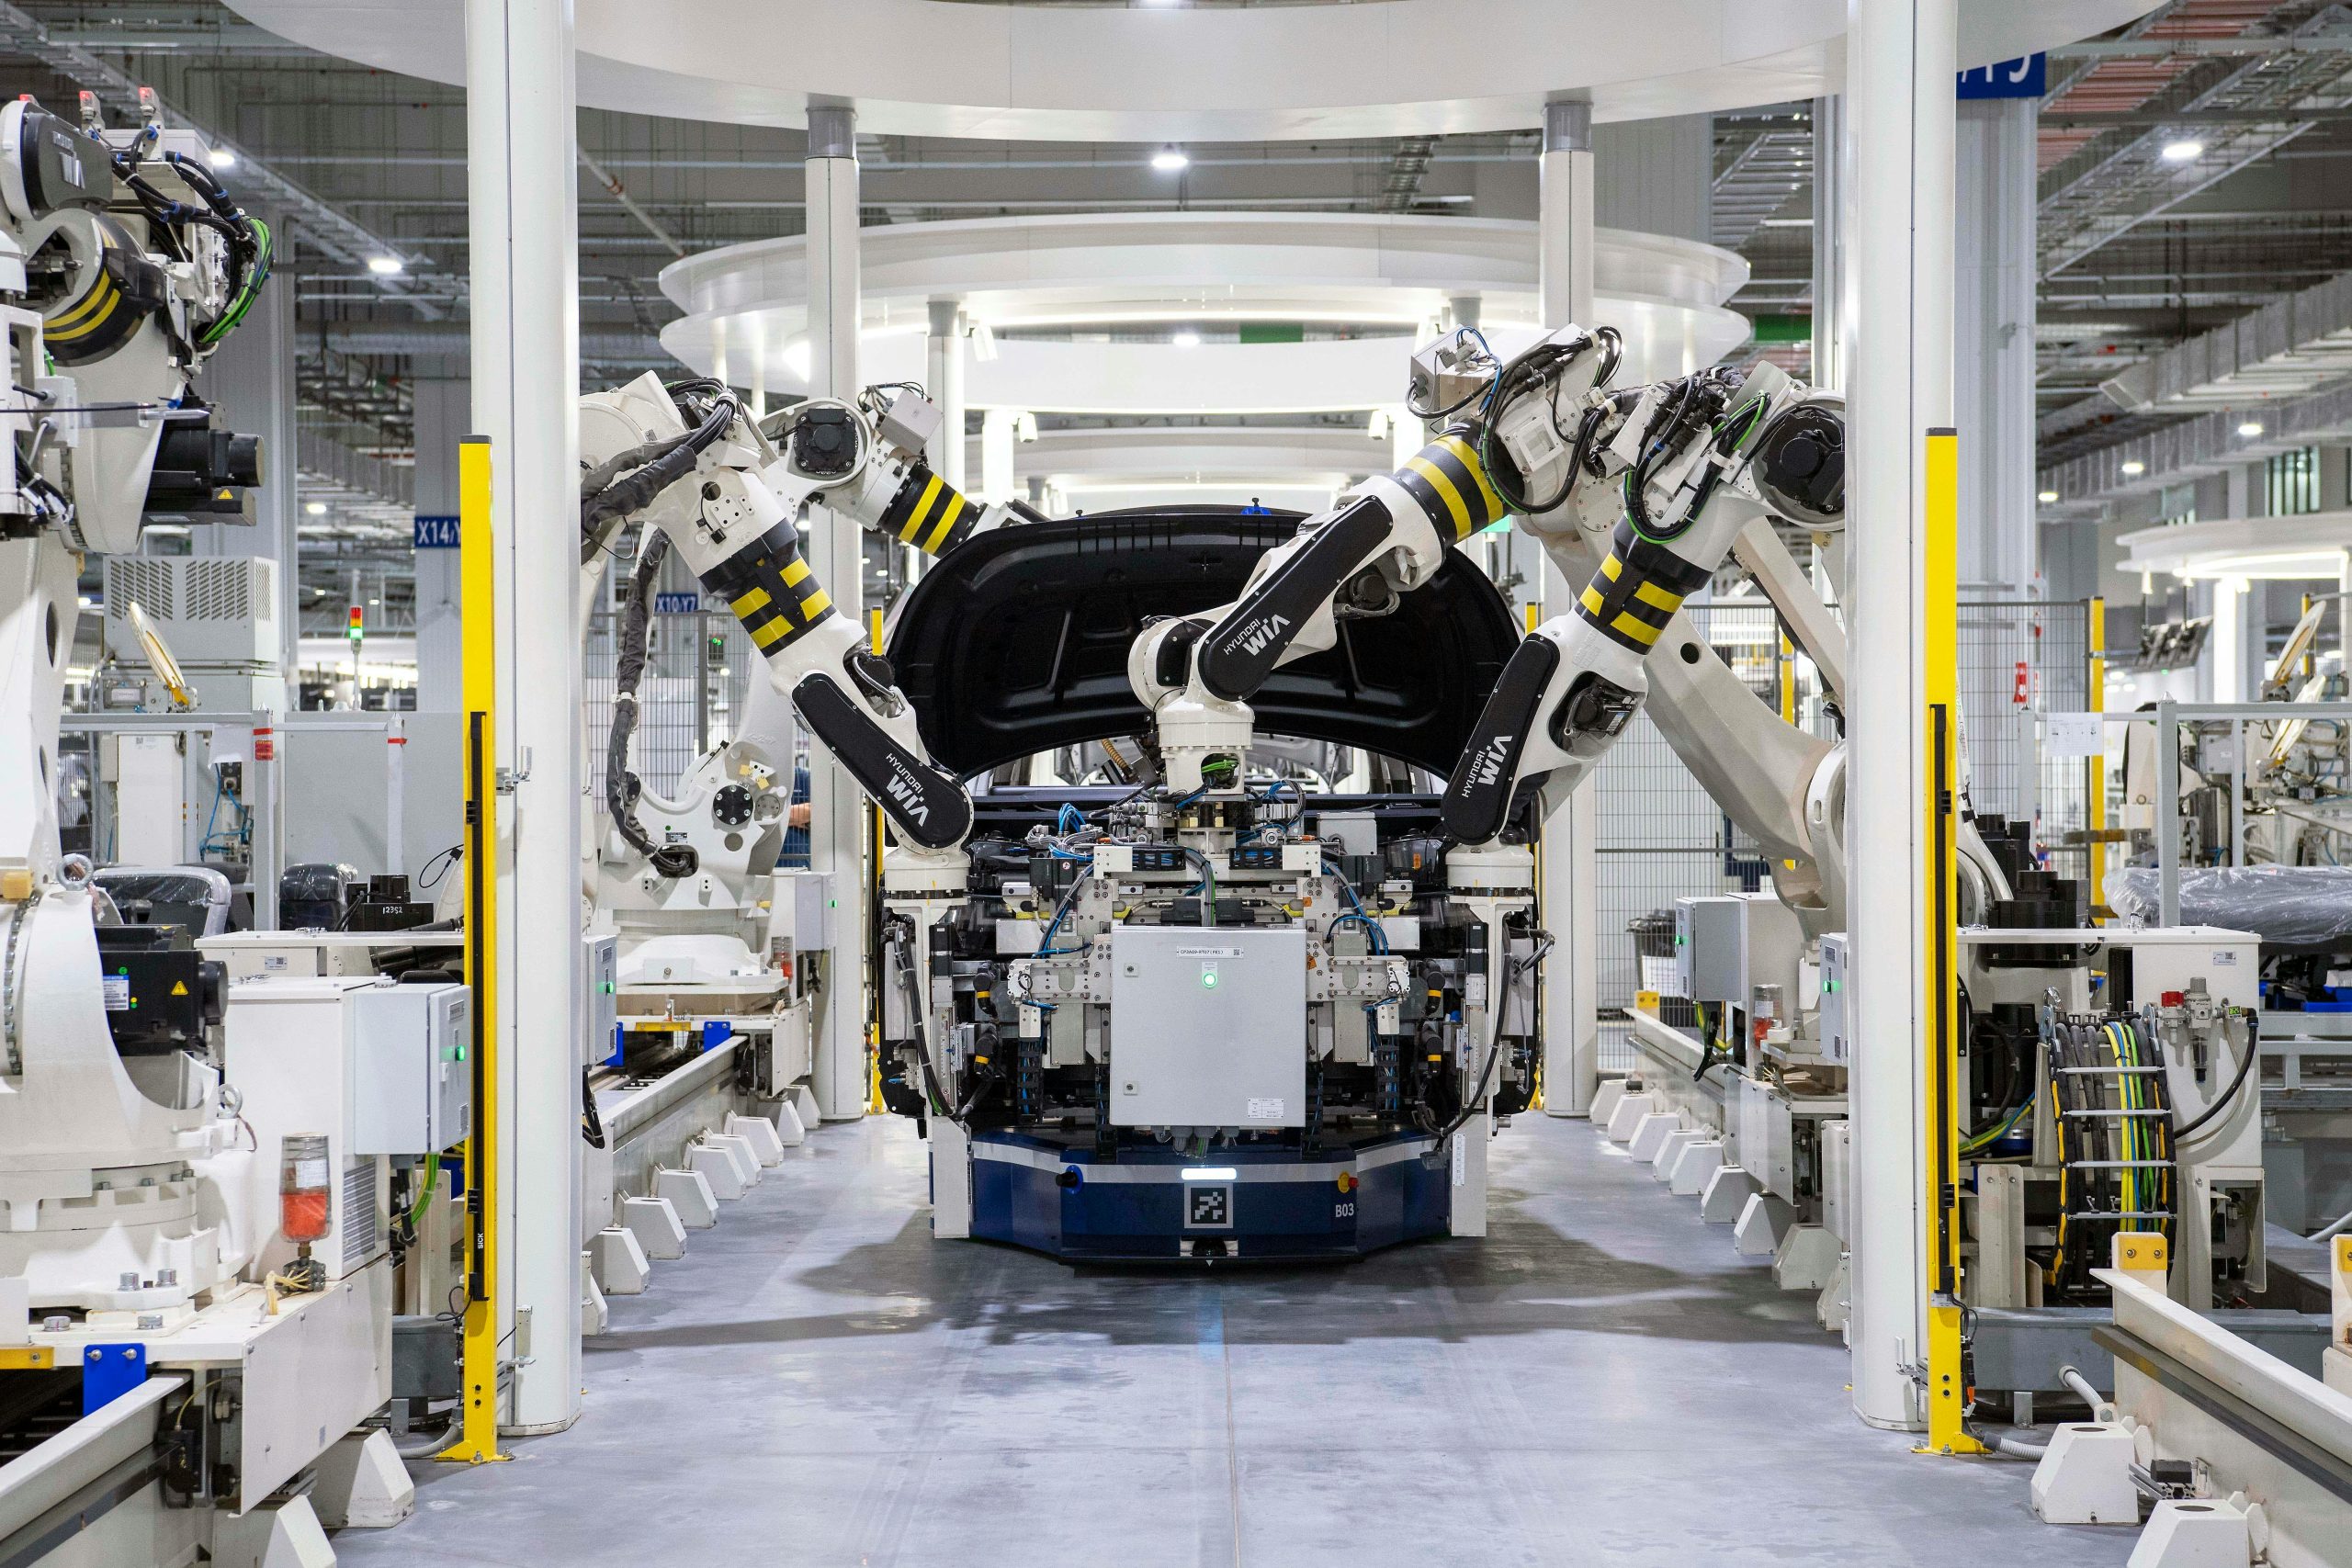 Factory robots with robotic arms assemble automobile parts on a production line.